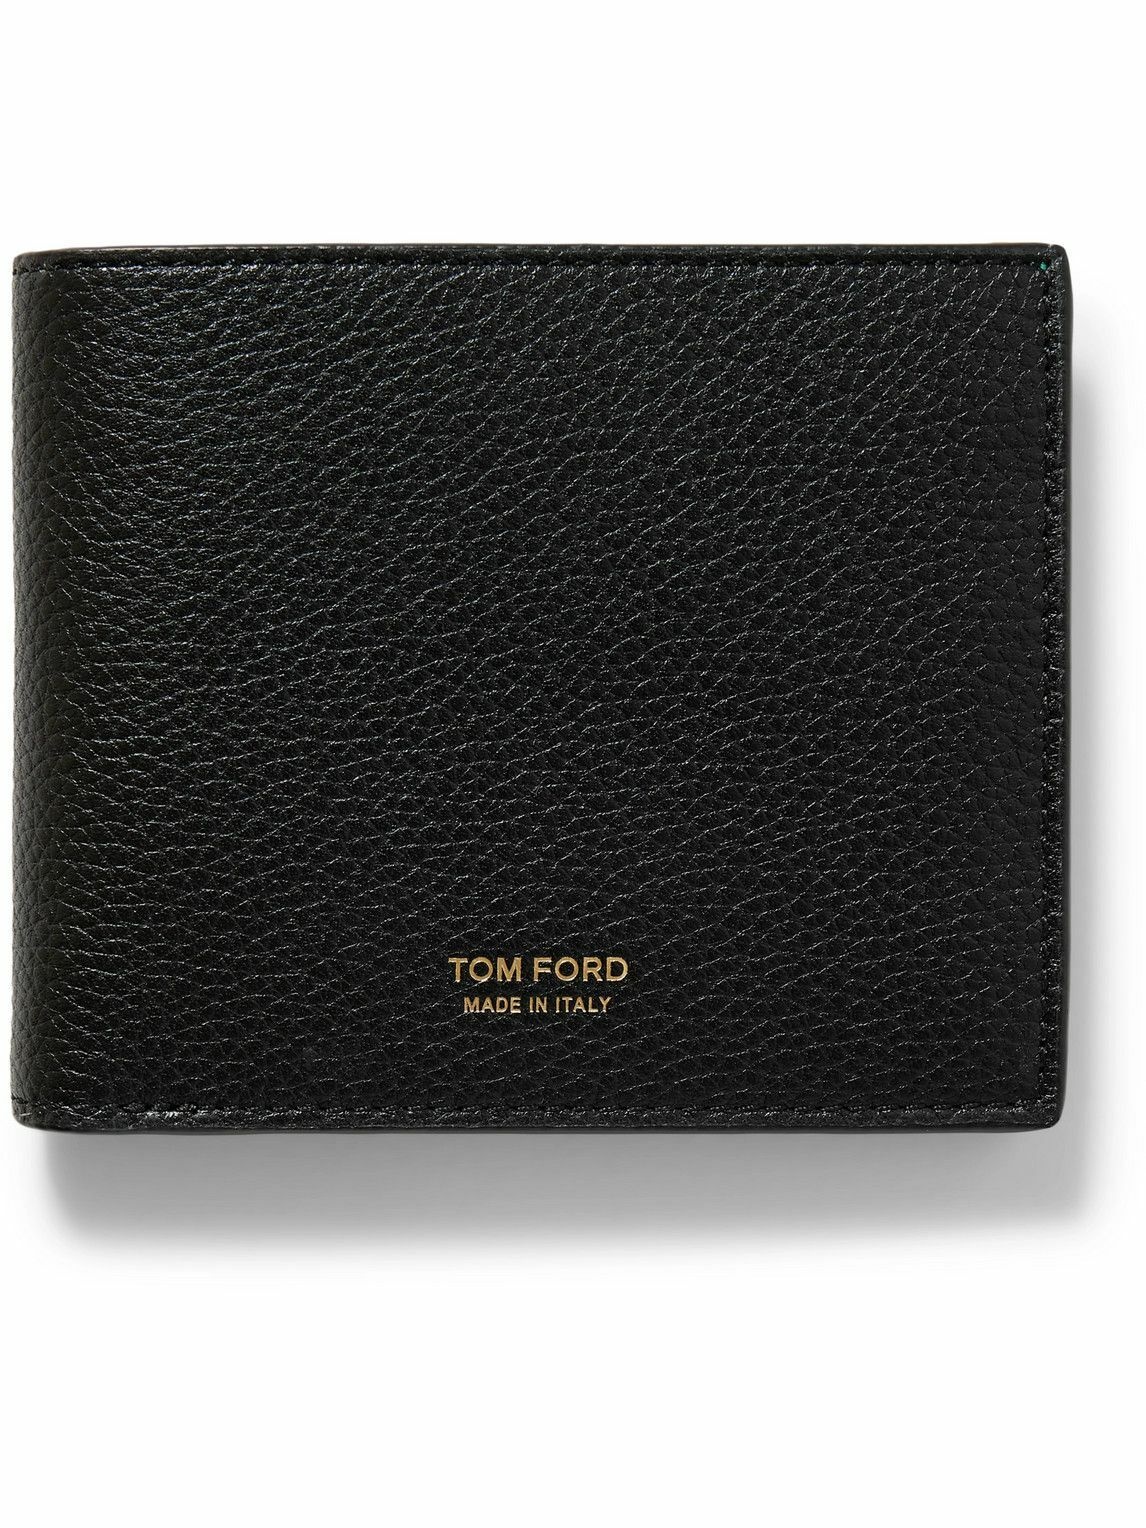 TOM FORD - Full-Grain Leather Bifold Wallet TOM FORD